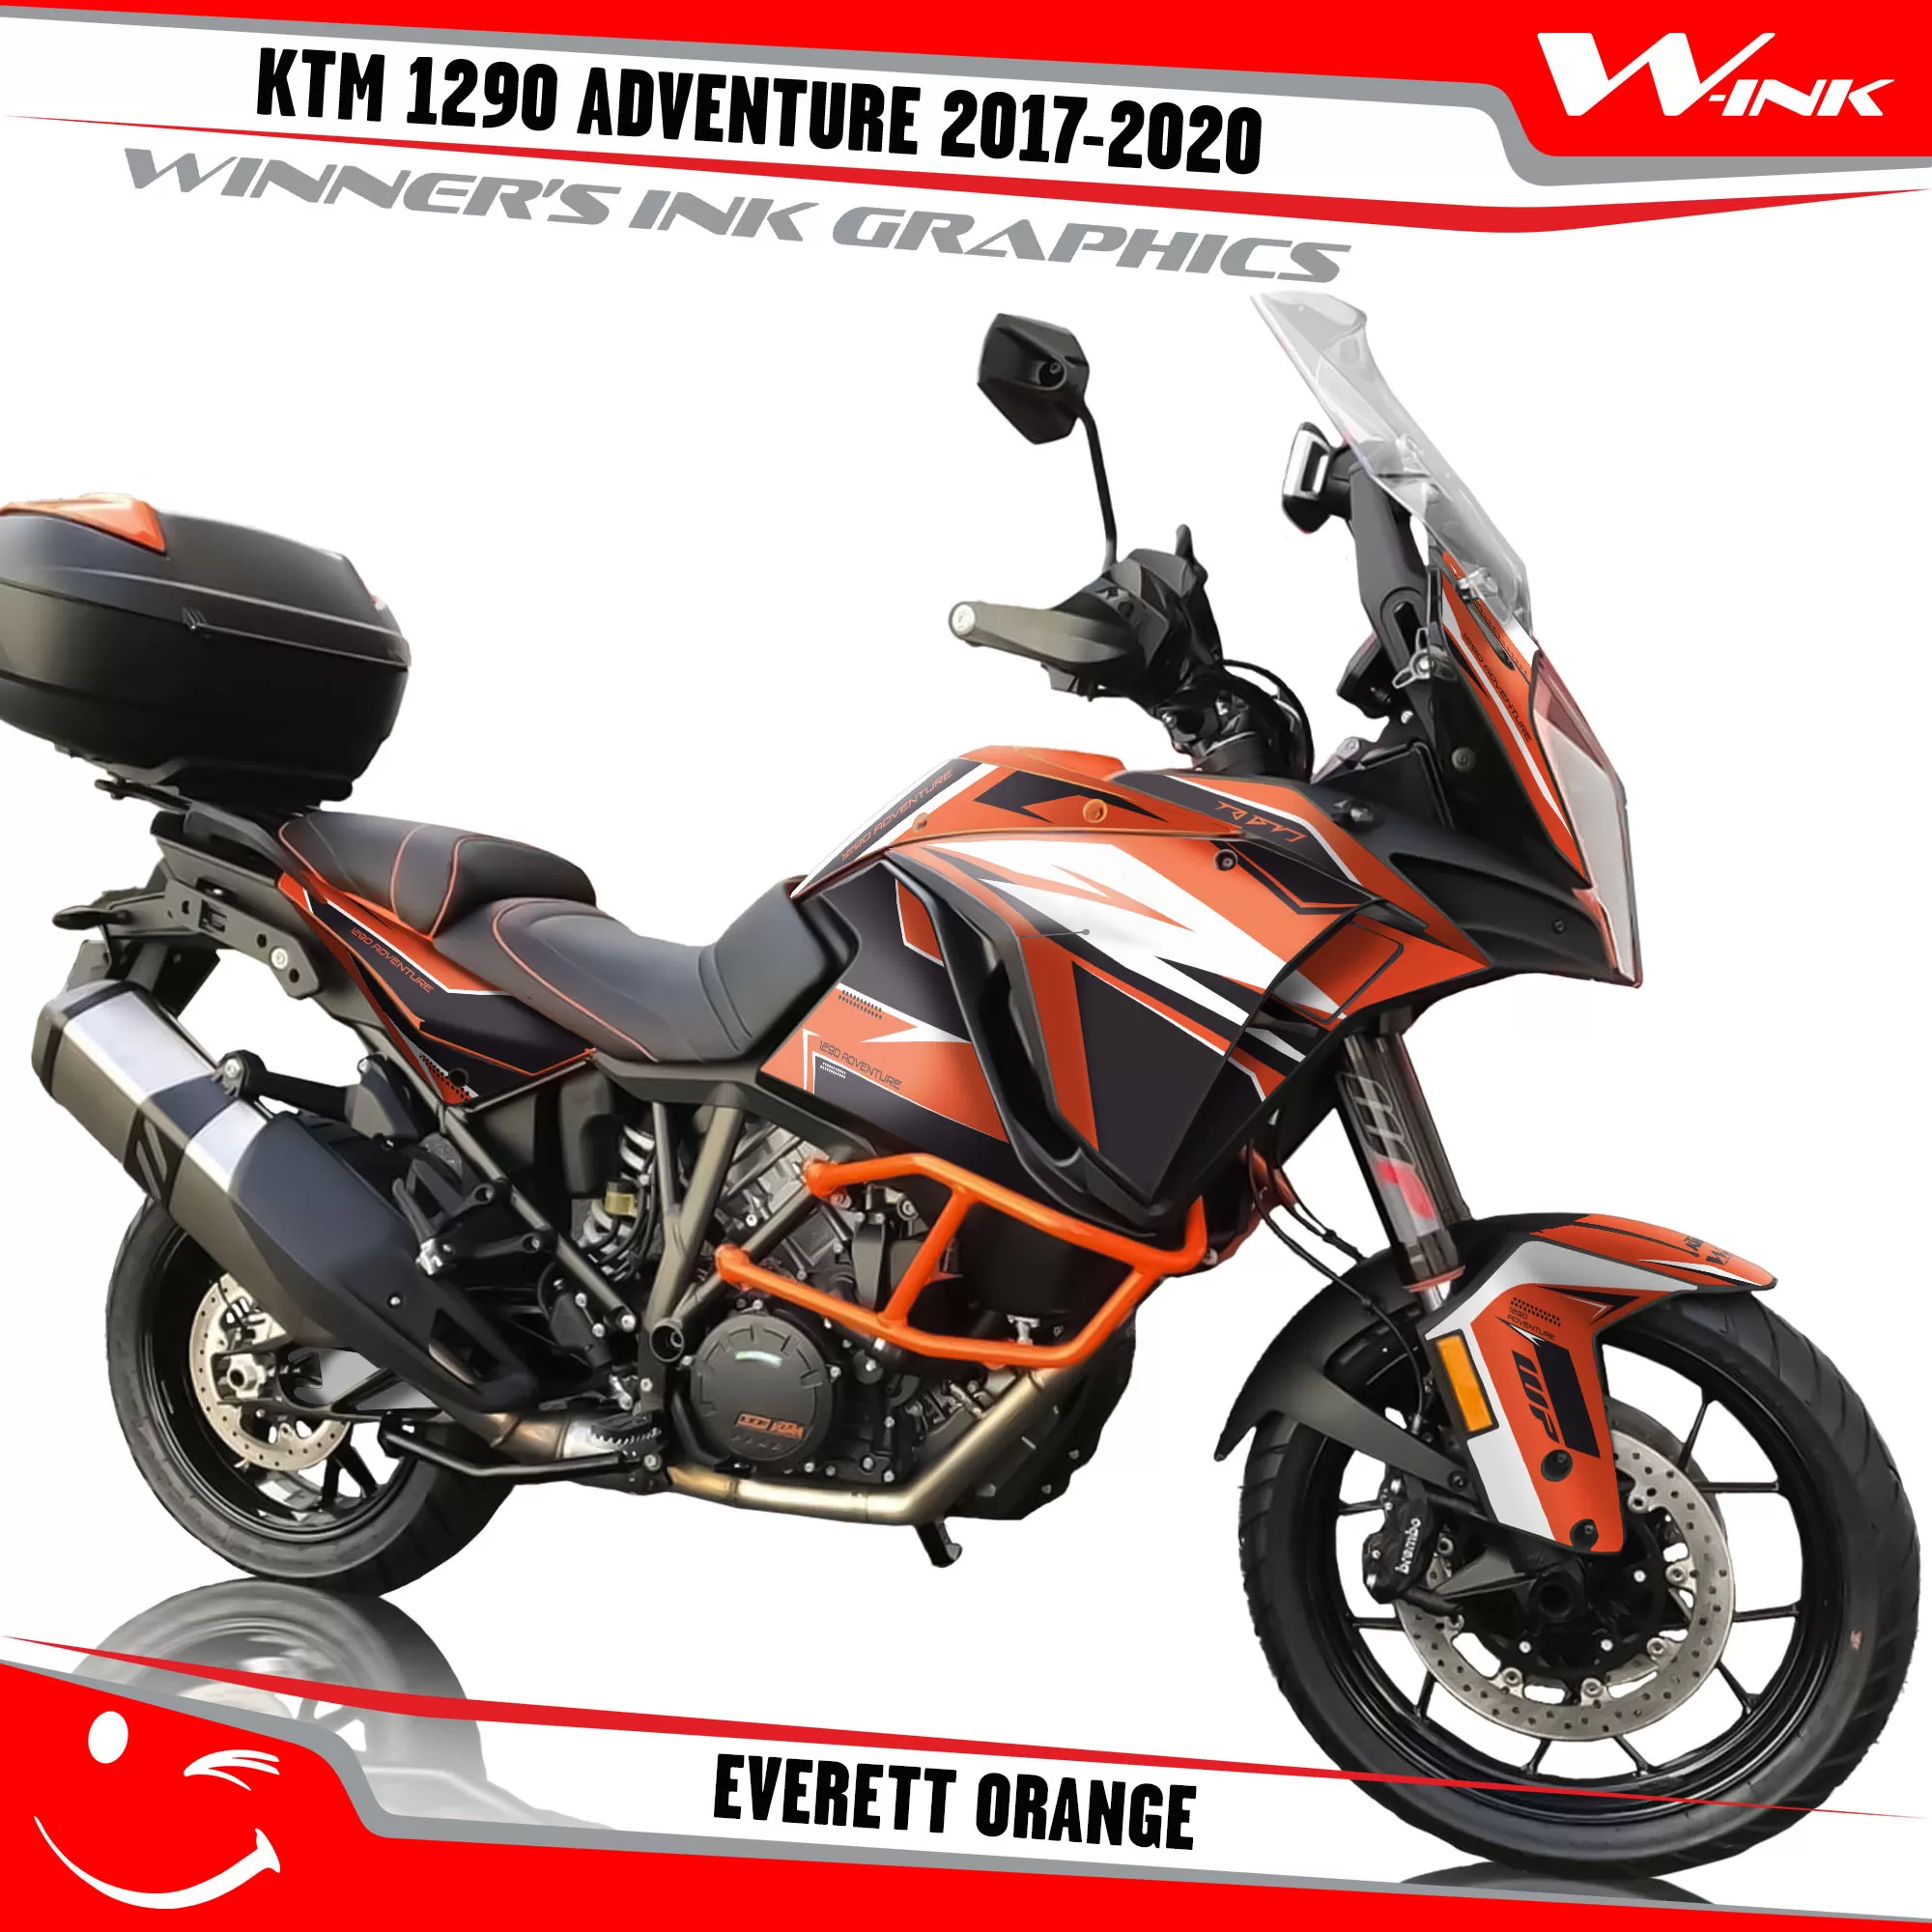 KTM-Adventure-1290-2017-2018-2019-2020-graphics-kit-and-decals-Everett-Orange